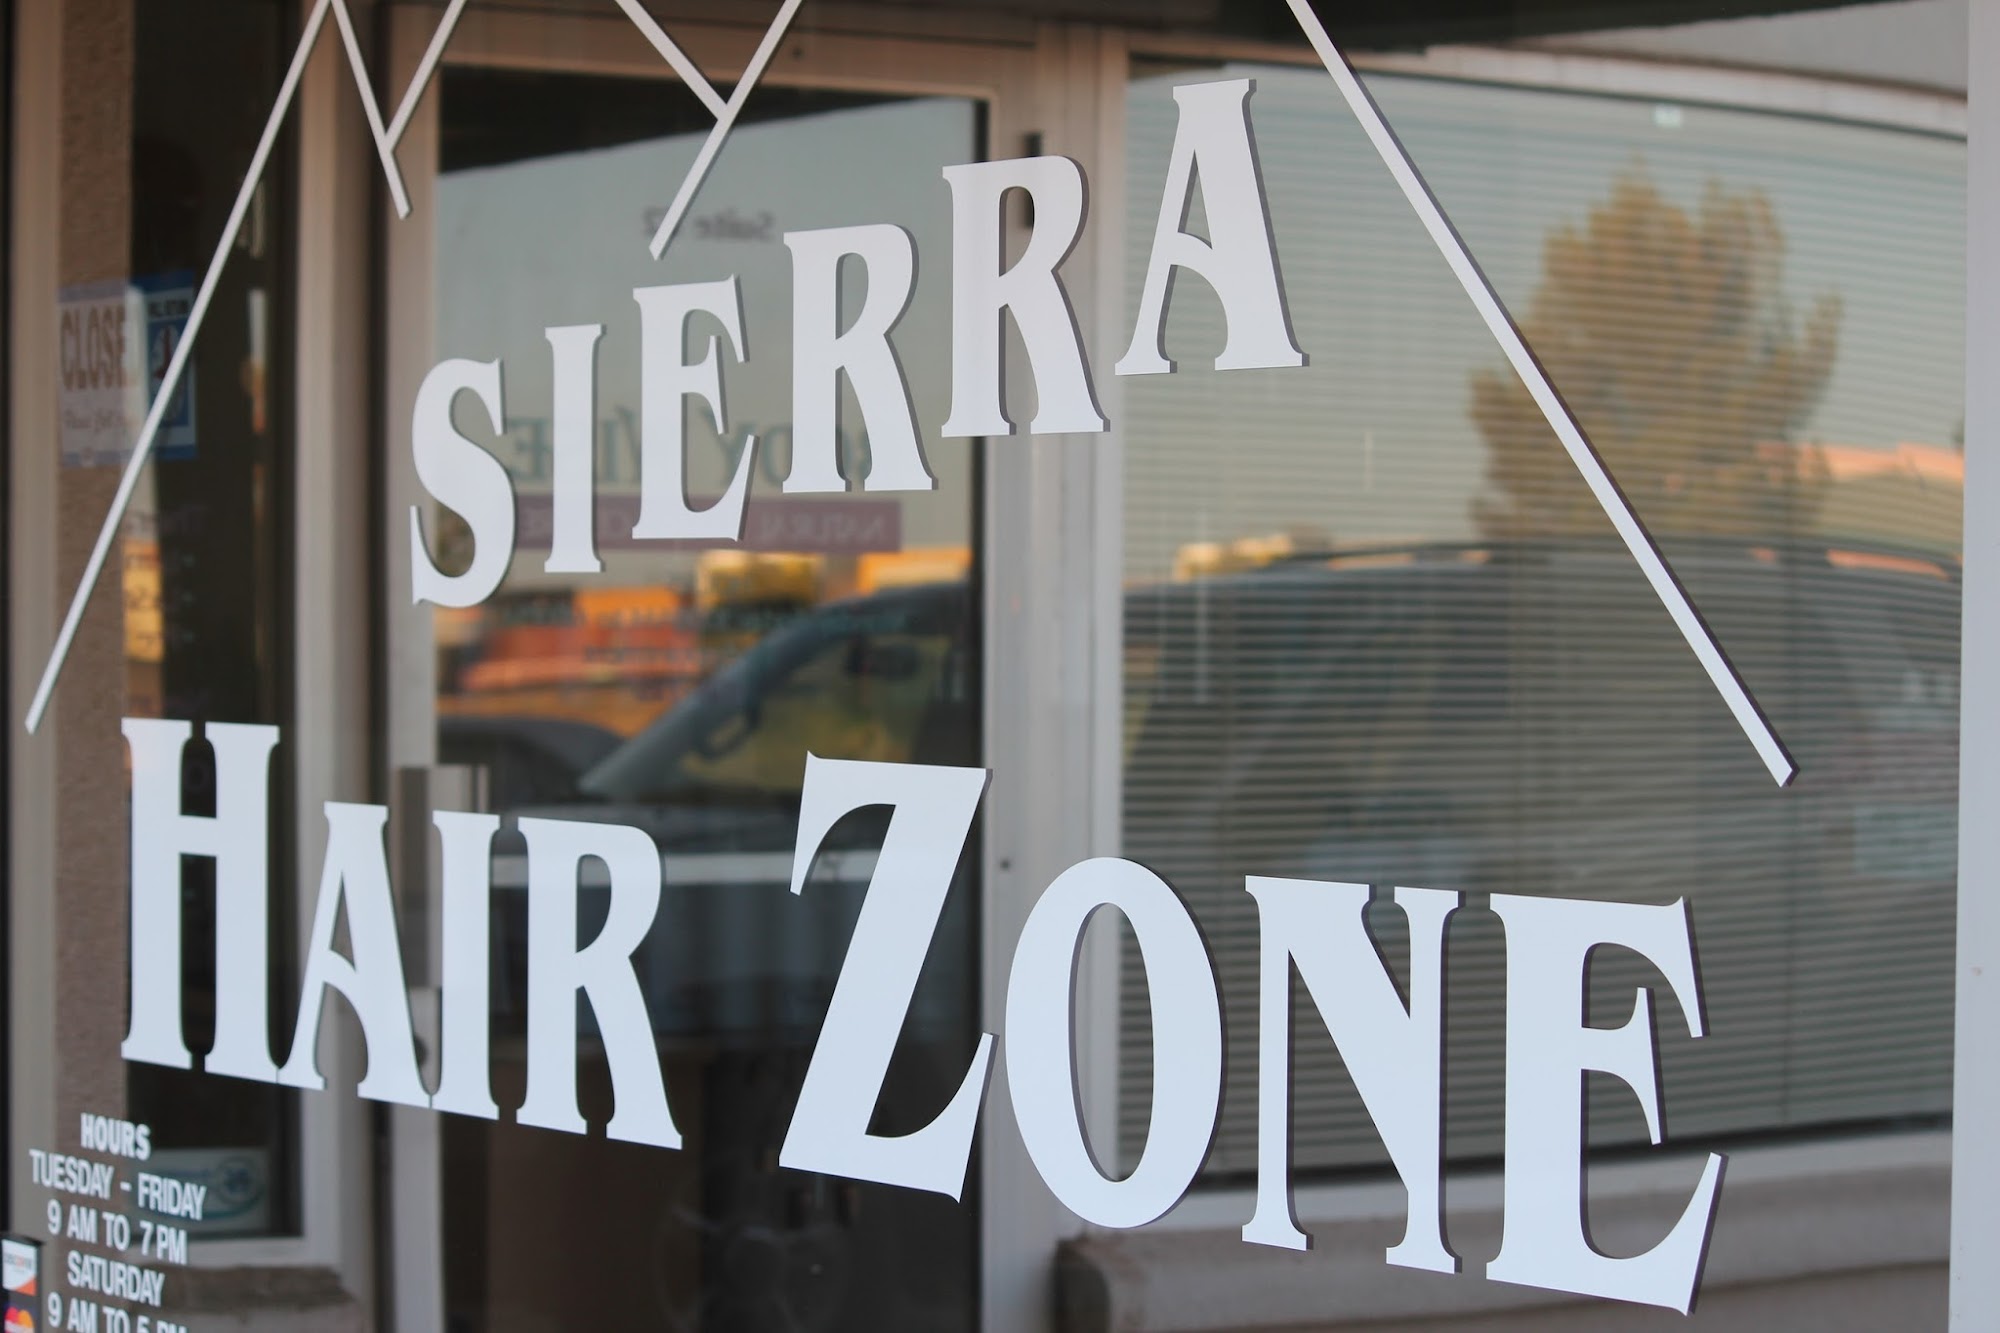 Sierra Hair Zone 1700 AZ-92 Suite D, Sierra Vista Southeast Arizona 85635